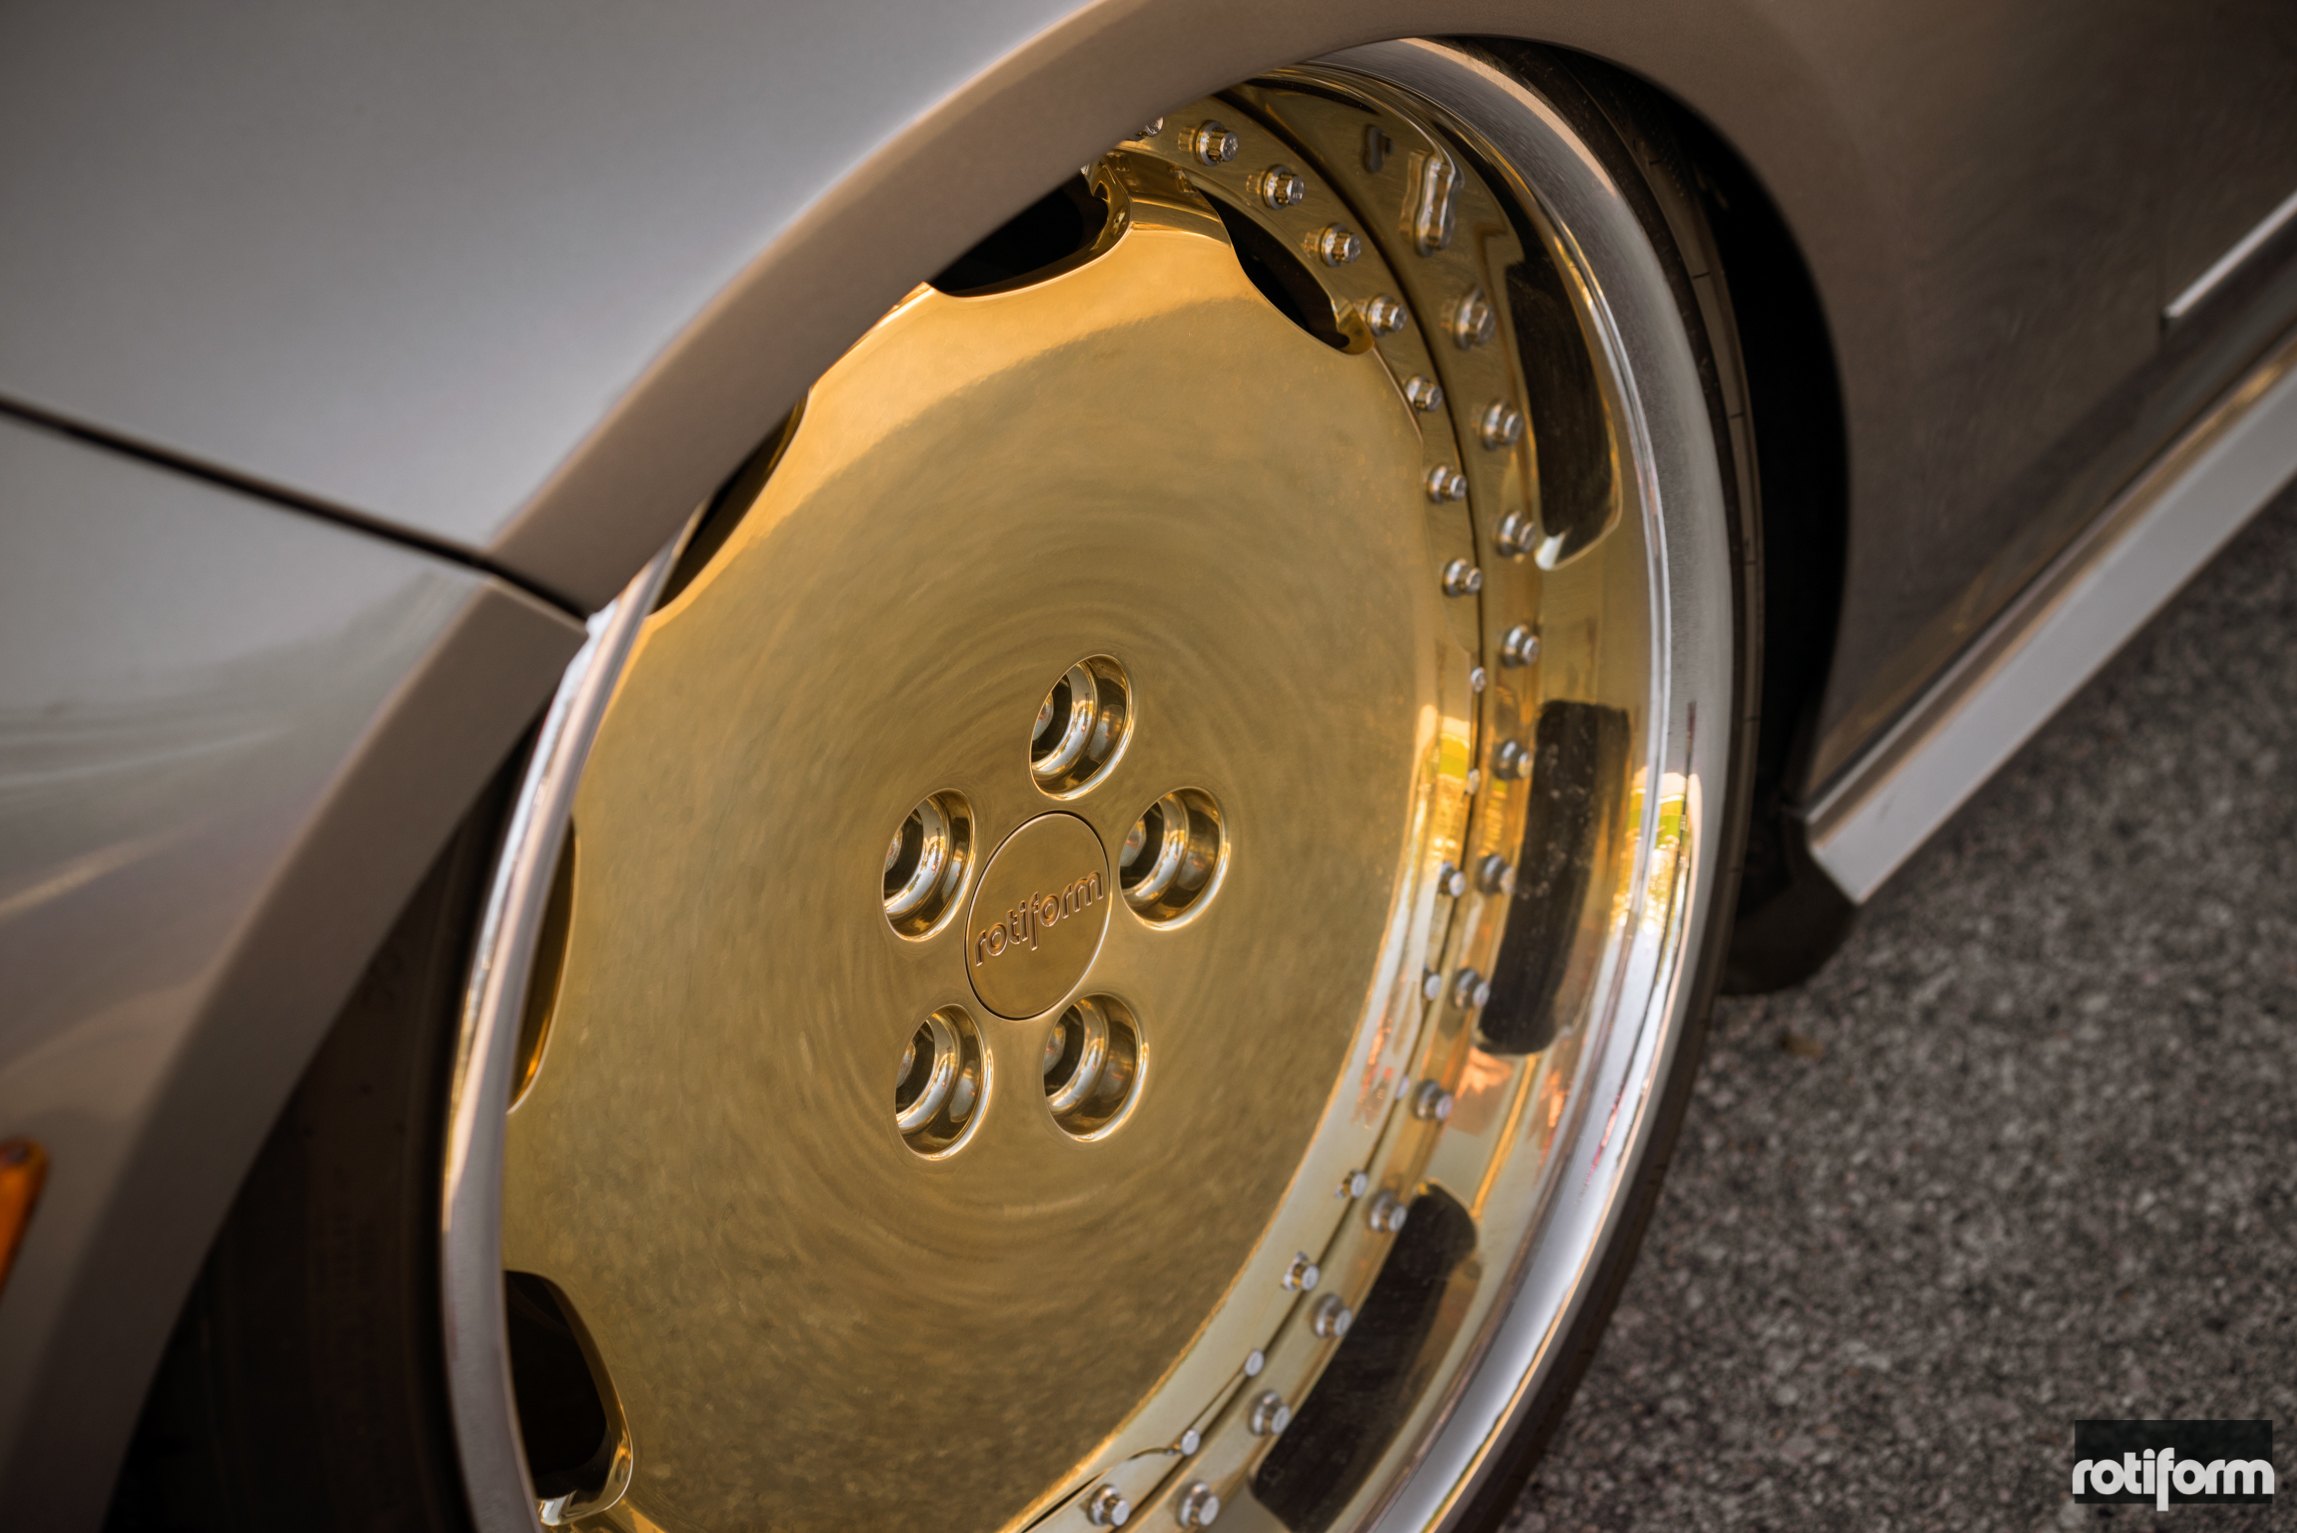 Metallic Mercedes E Class with Custom Gold Rotiform Rims - Photo by Rotiform